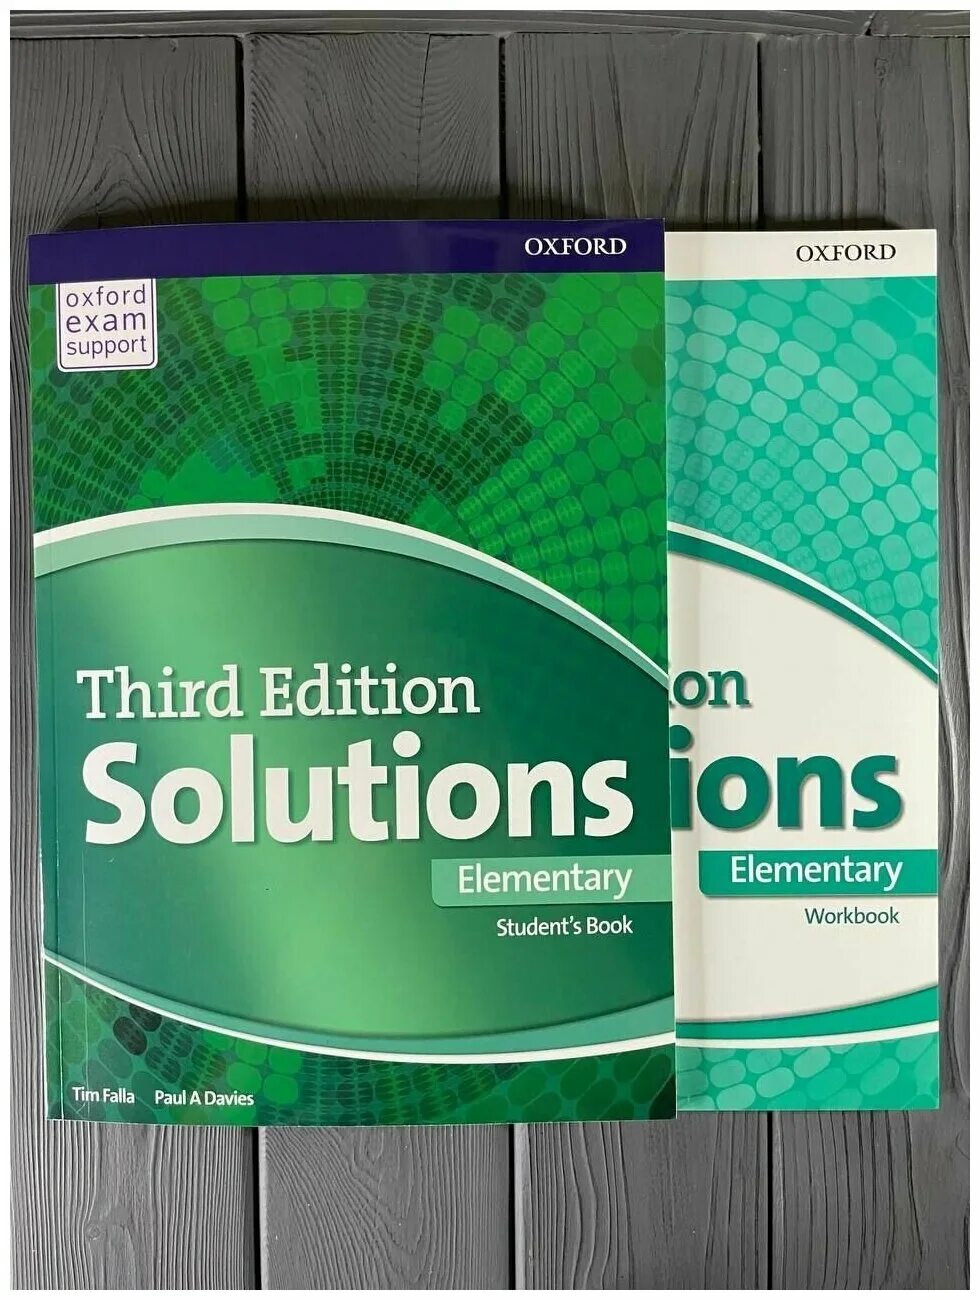 Английский язык solutions elementary students book. Solutions Elementary 3rd Edition. Учебник solutions Elementary 3 Edition. Third Edition solutions Elementary. Oxford solutions Elementary.